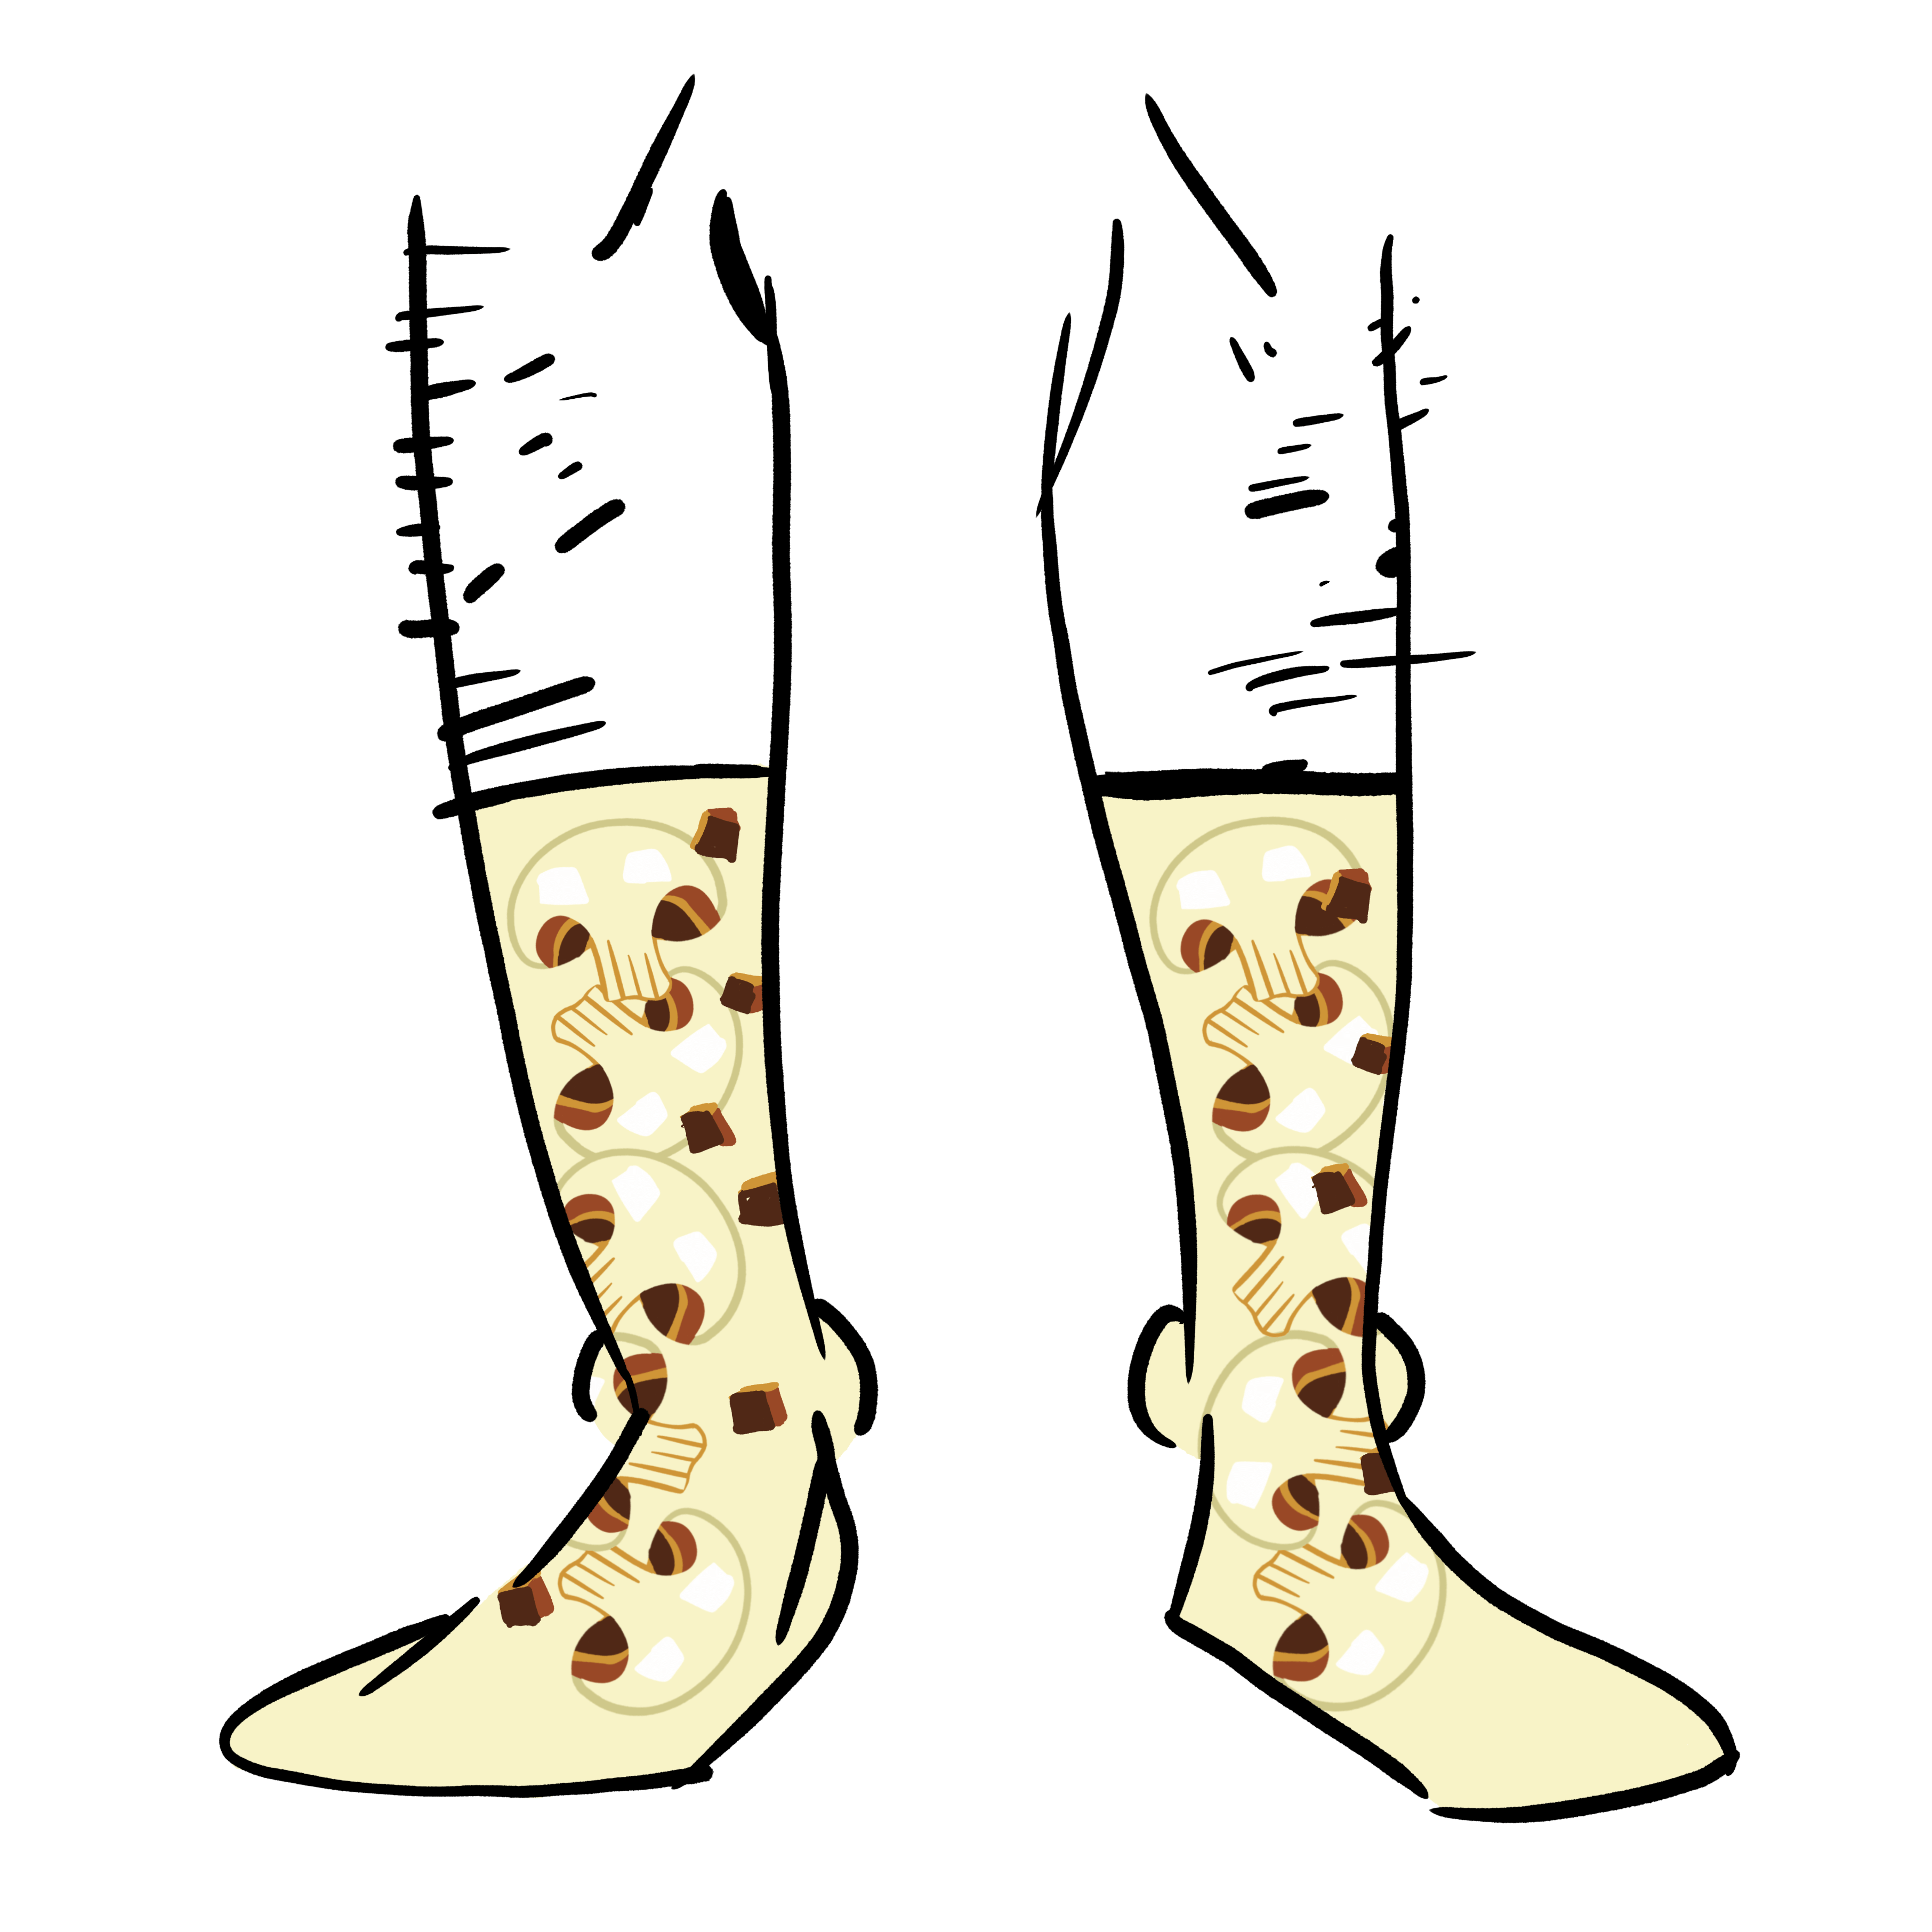 Yellow socks with mushrooms on them.